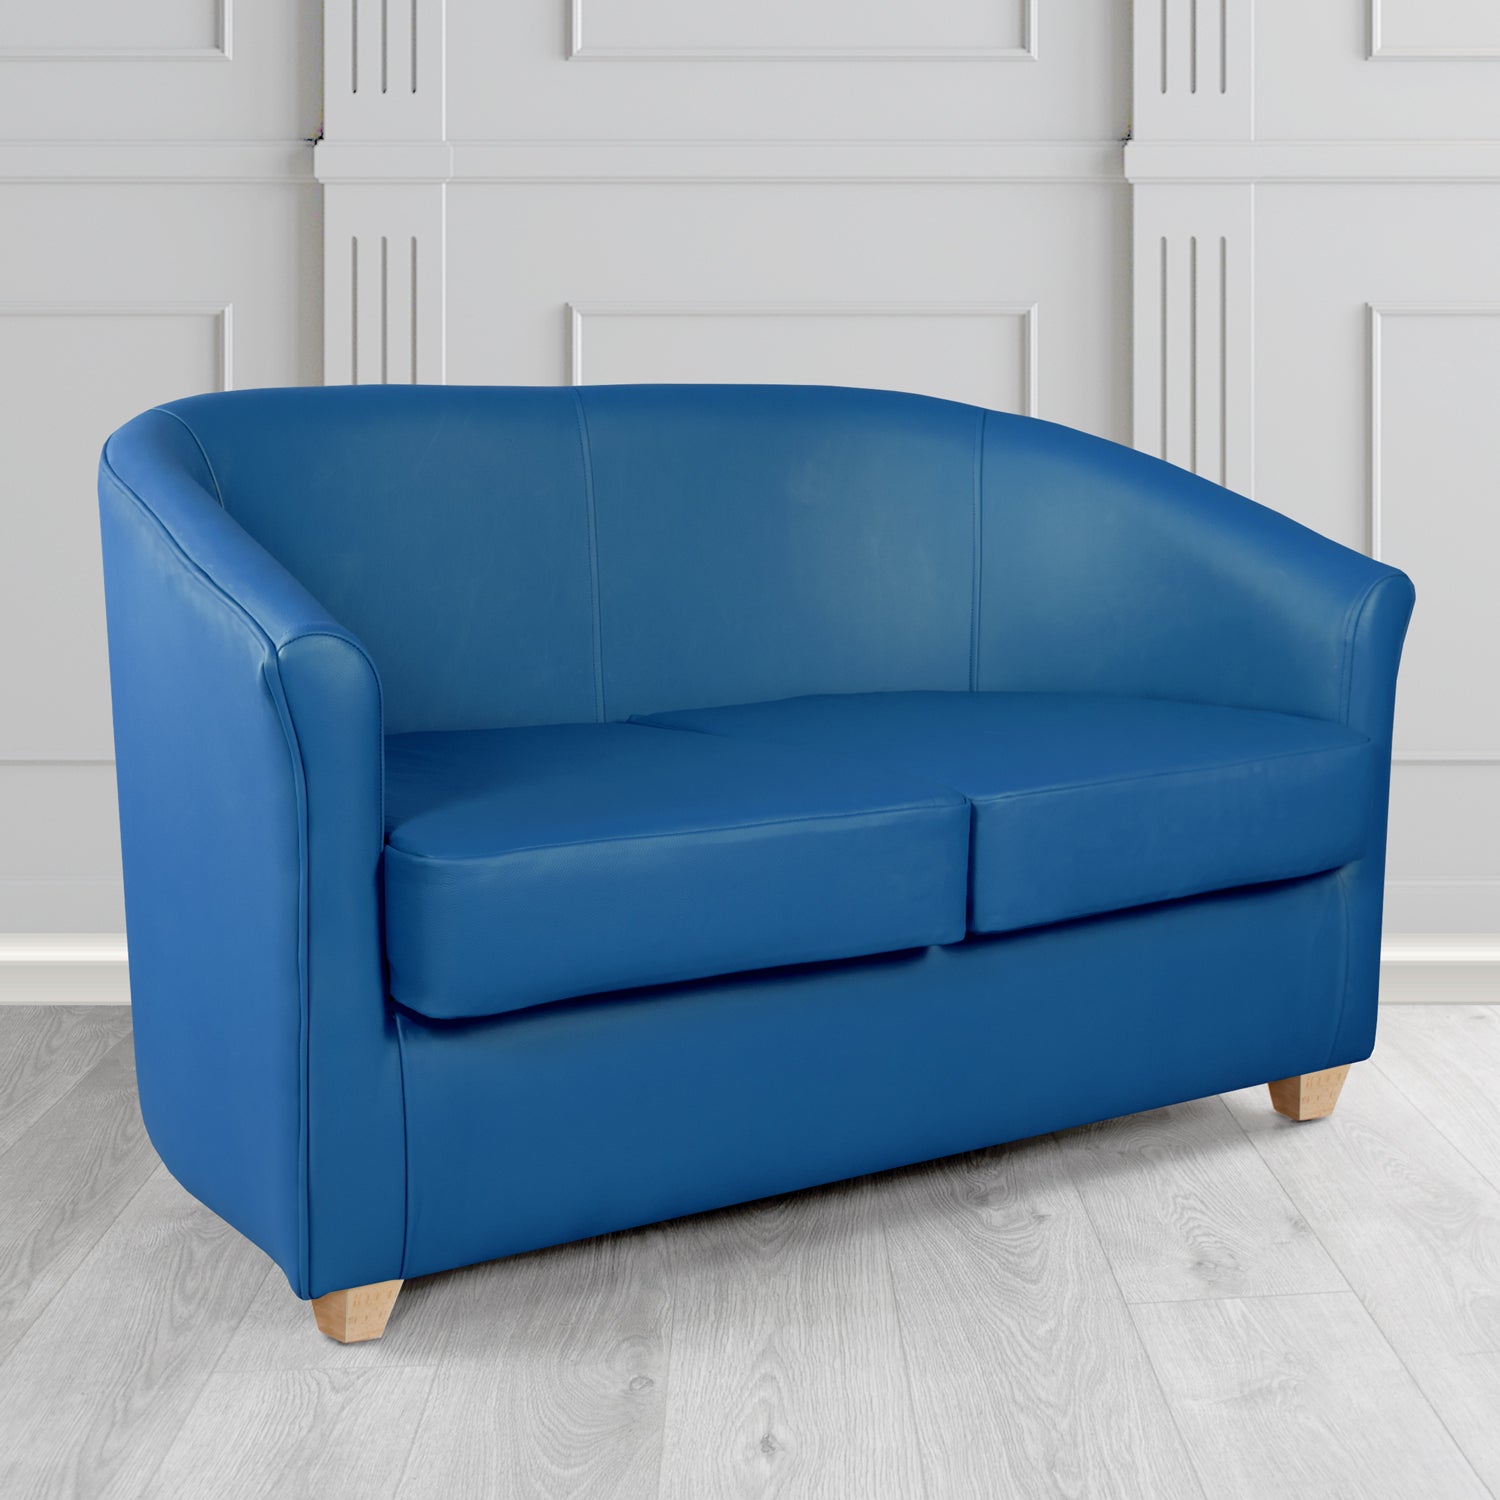 Cannes 2 Seater Tub Sofa in Just Colour Ocean Blue Crib 5 Faux Leather - The Tub Chair Shop